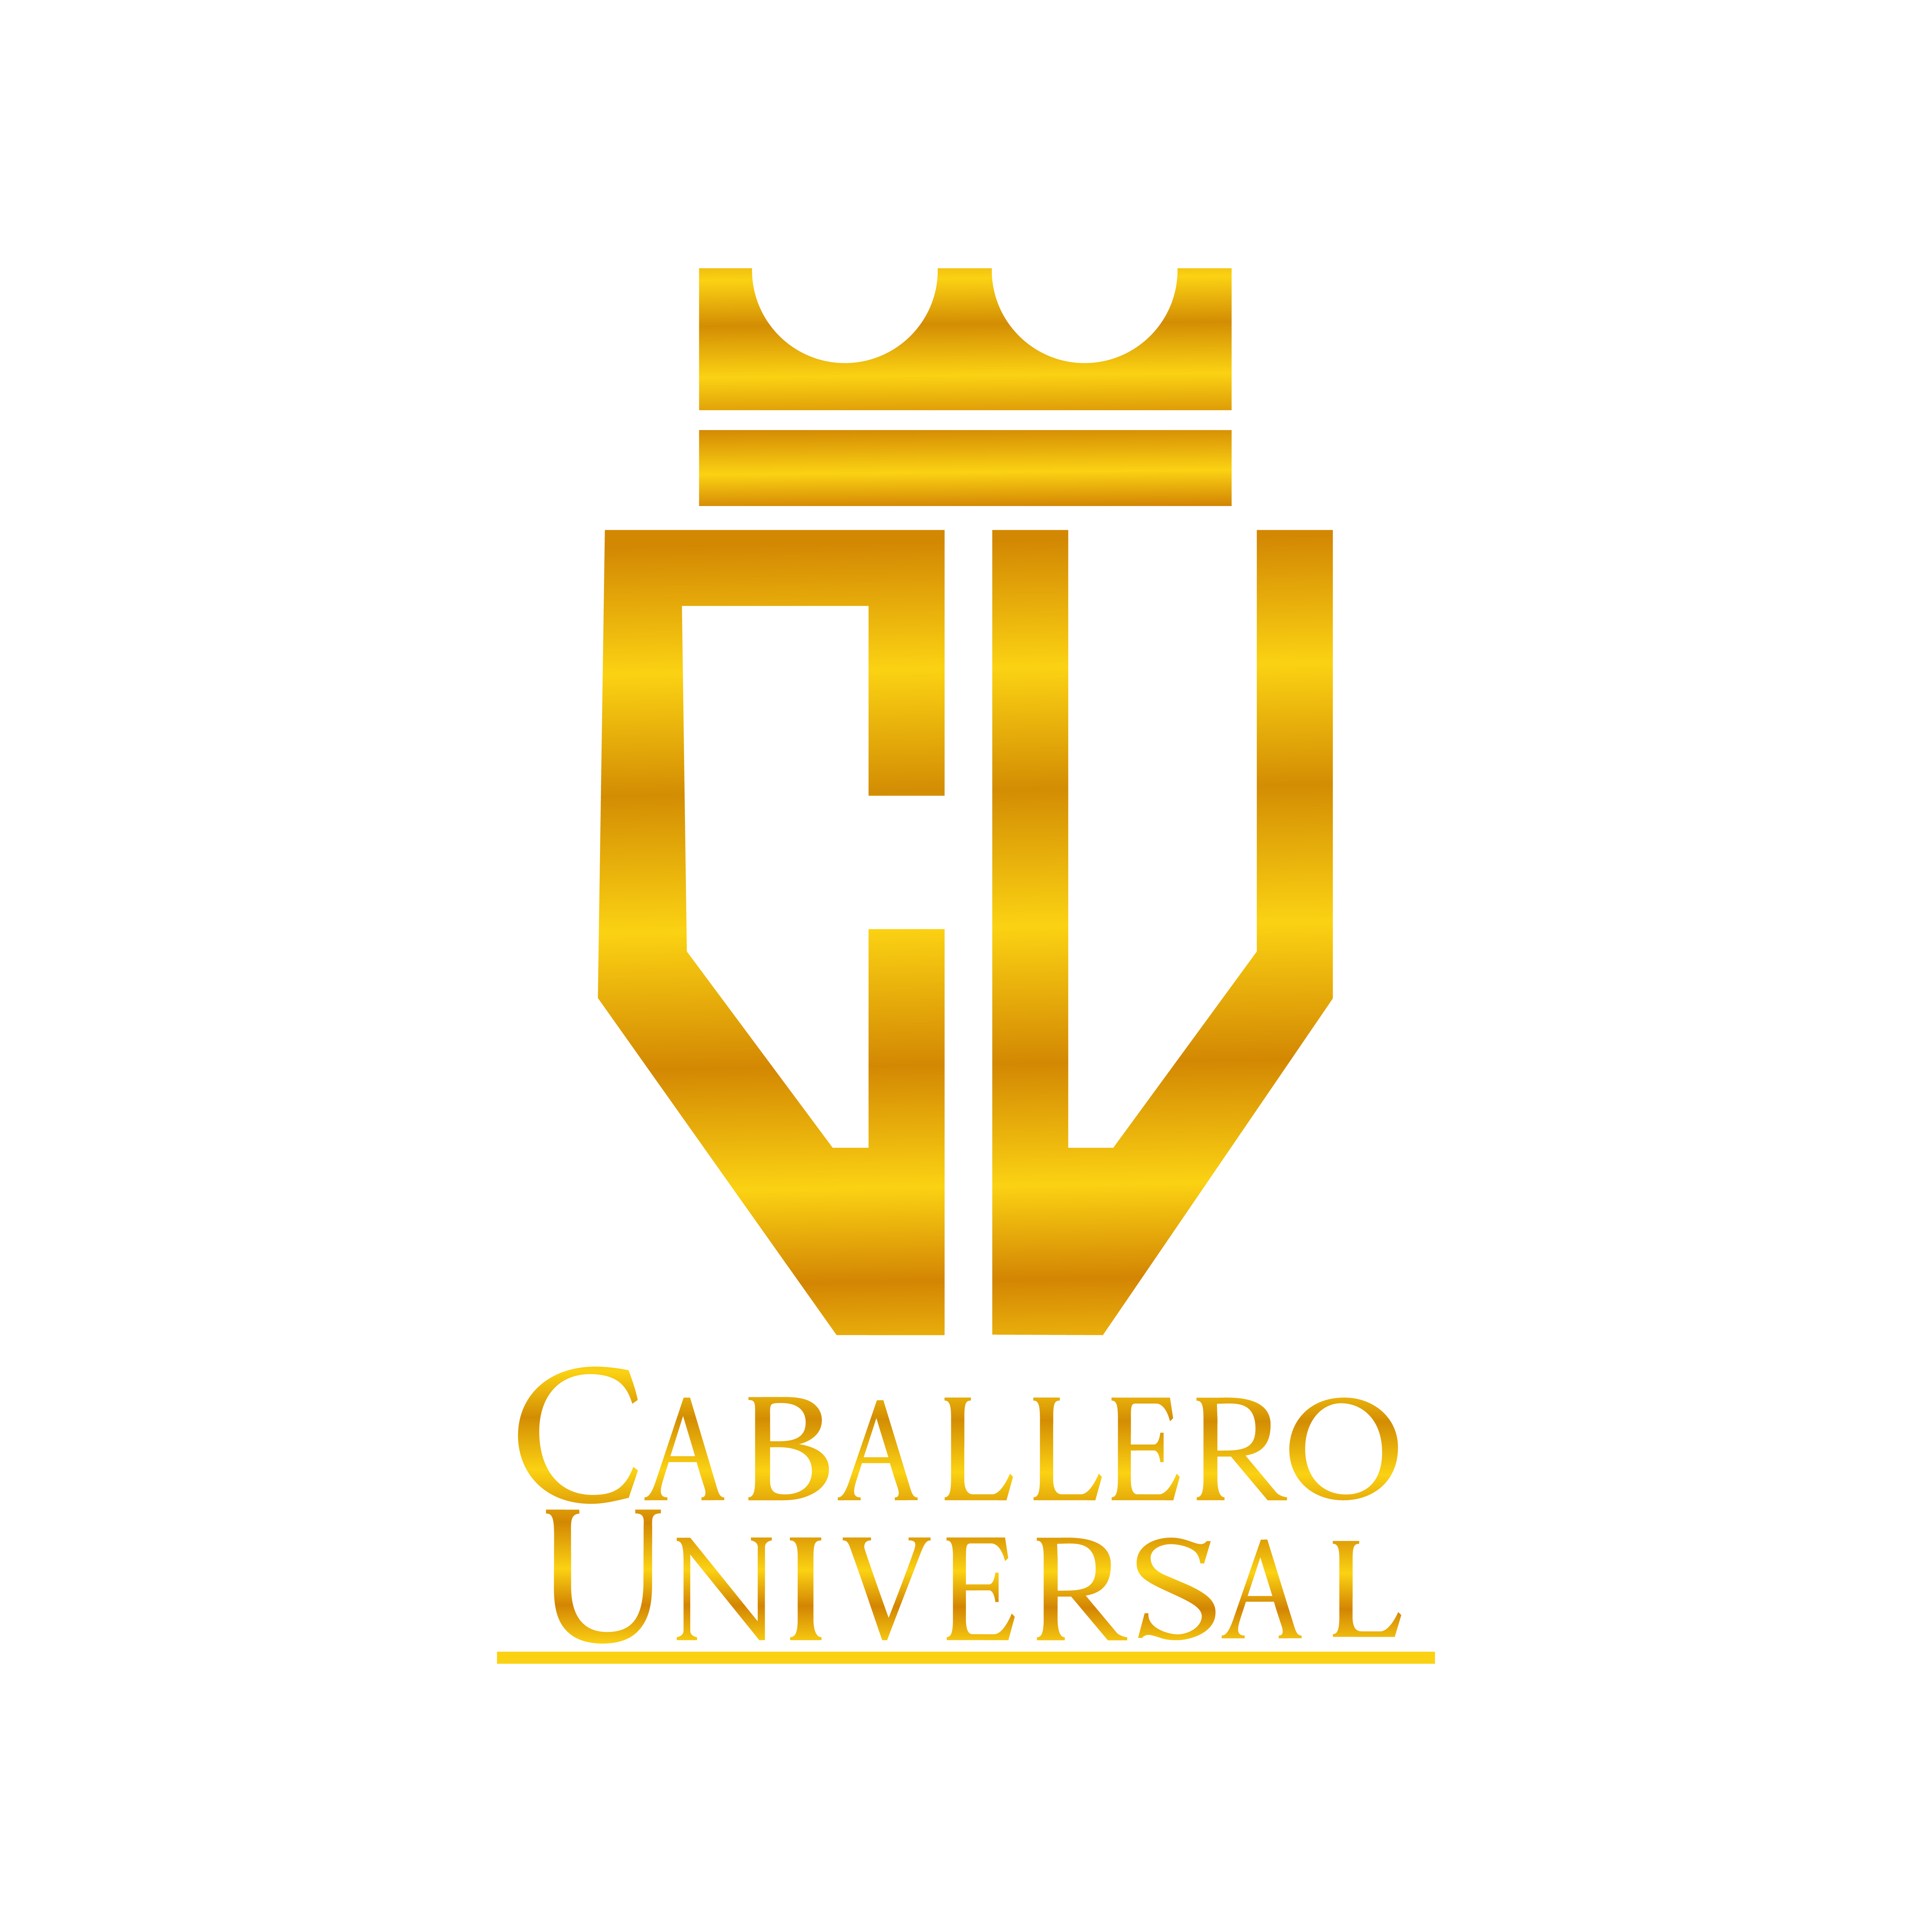 Caballero Universal Logo